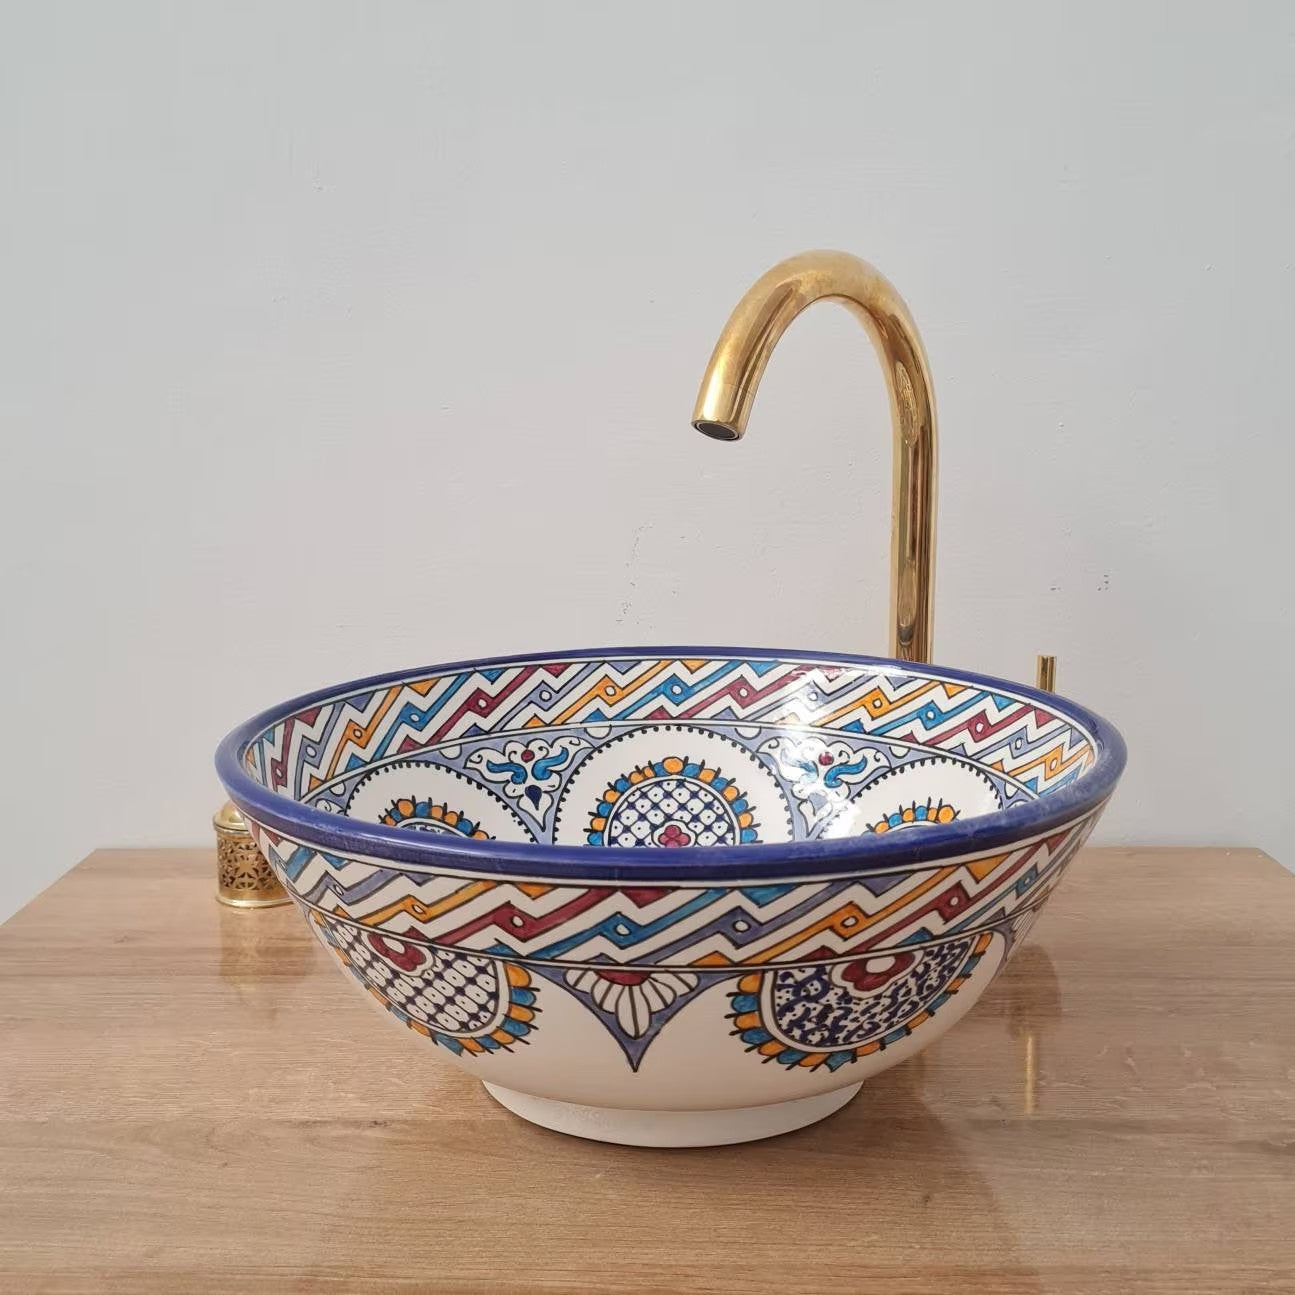 Moroccan sink | moroccan ceramic sink | bathroom sink | moroccan bathroom basin | moroccan sink bowl | Moroccan sink bowl #42